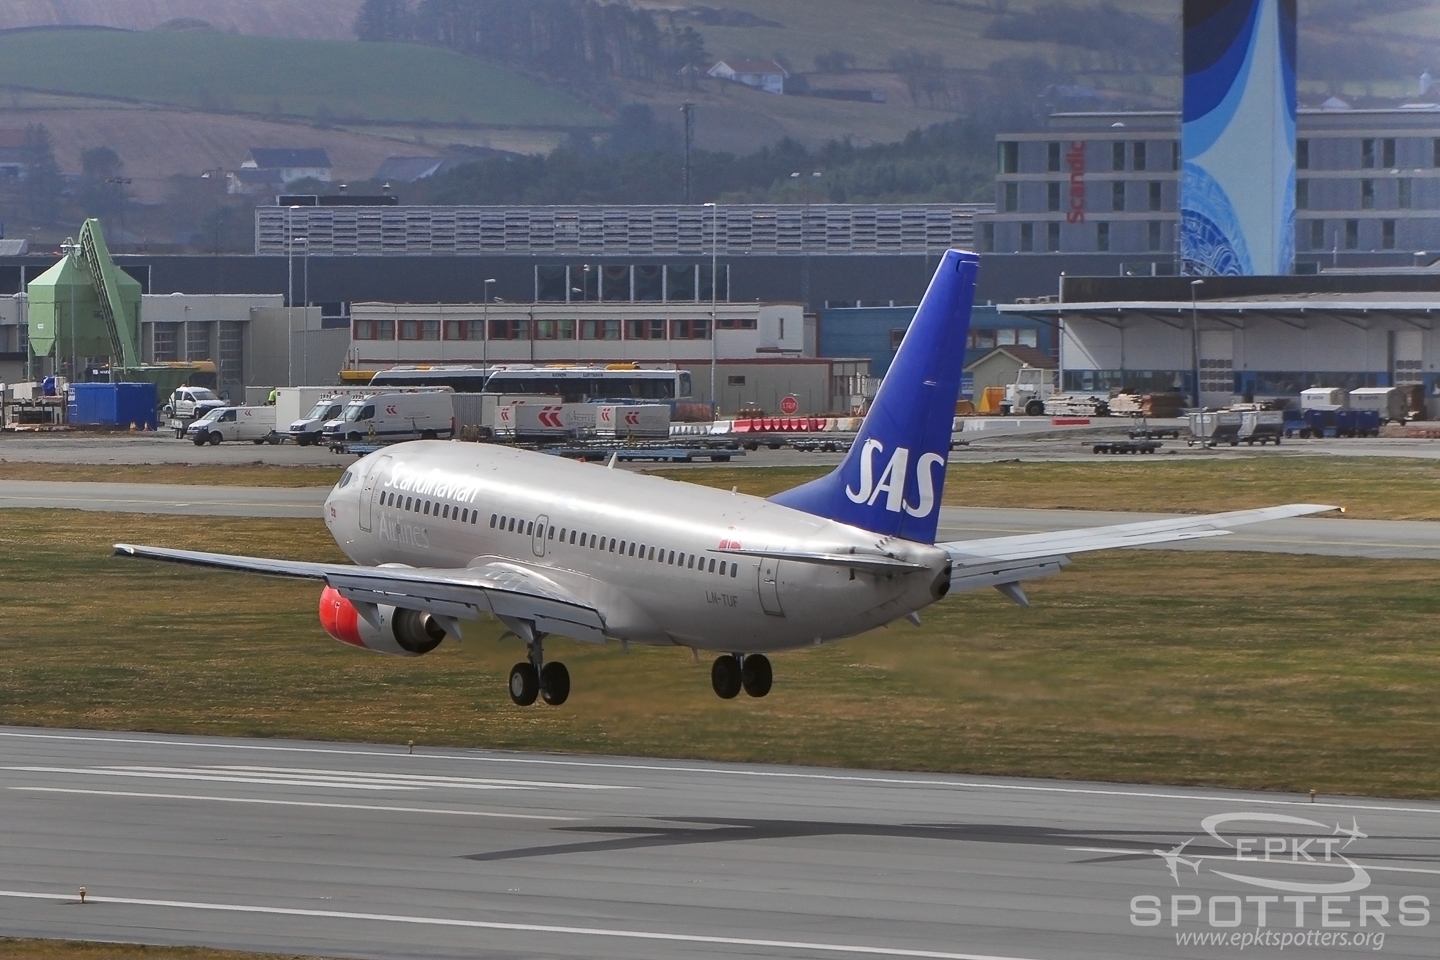 LN-TUF - Boeing 737 -705 (SAS Norge) / Sola - Stavanger Norway [ENZV/SVG ]